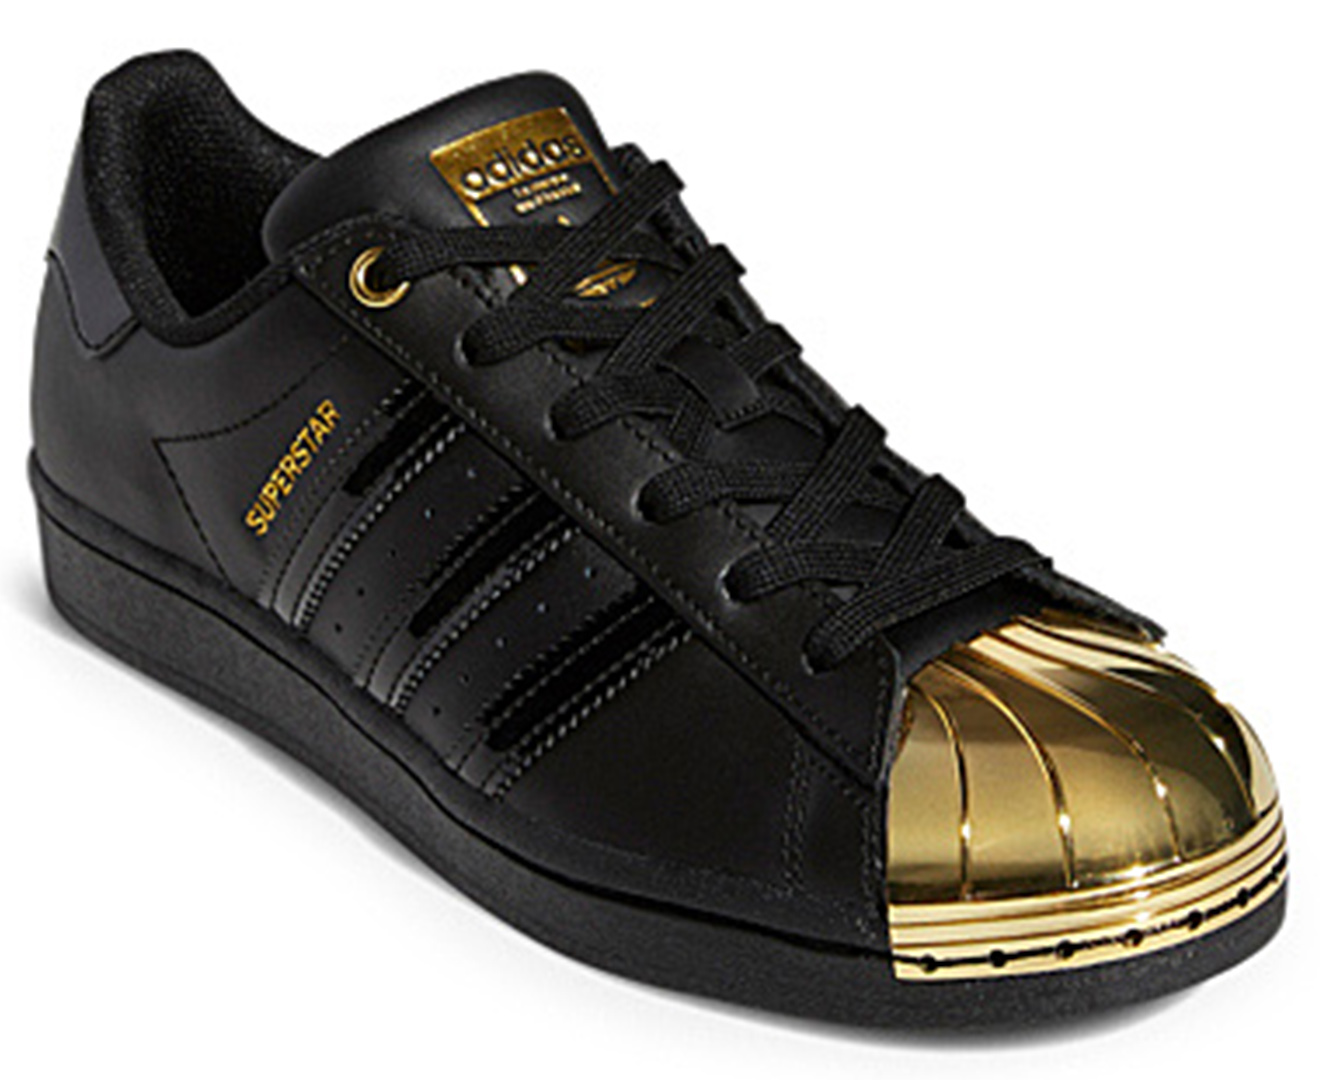 Adidas Originals Women's Superstar Metal Toe Sneakers - Black/Gold ...